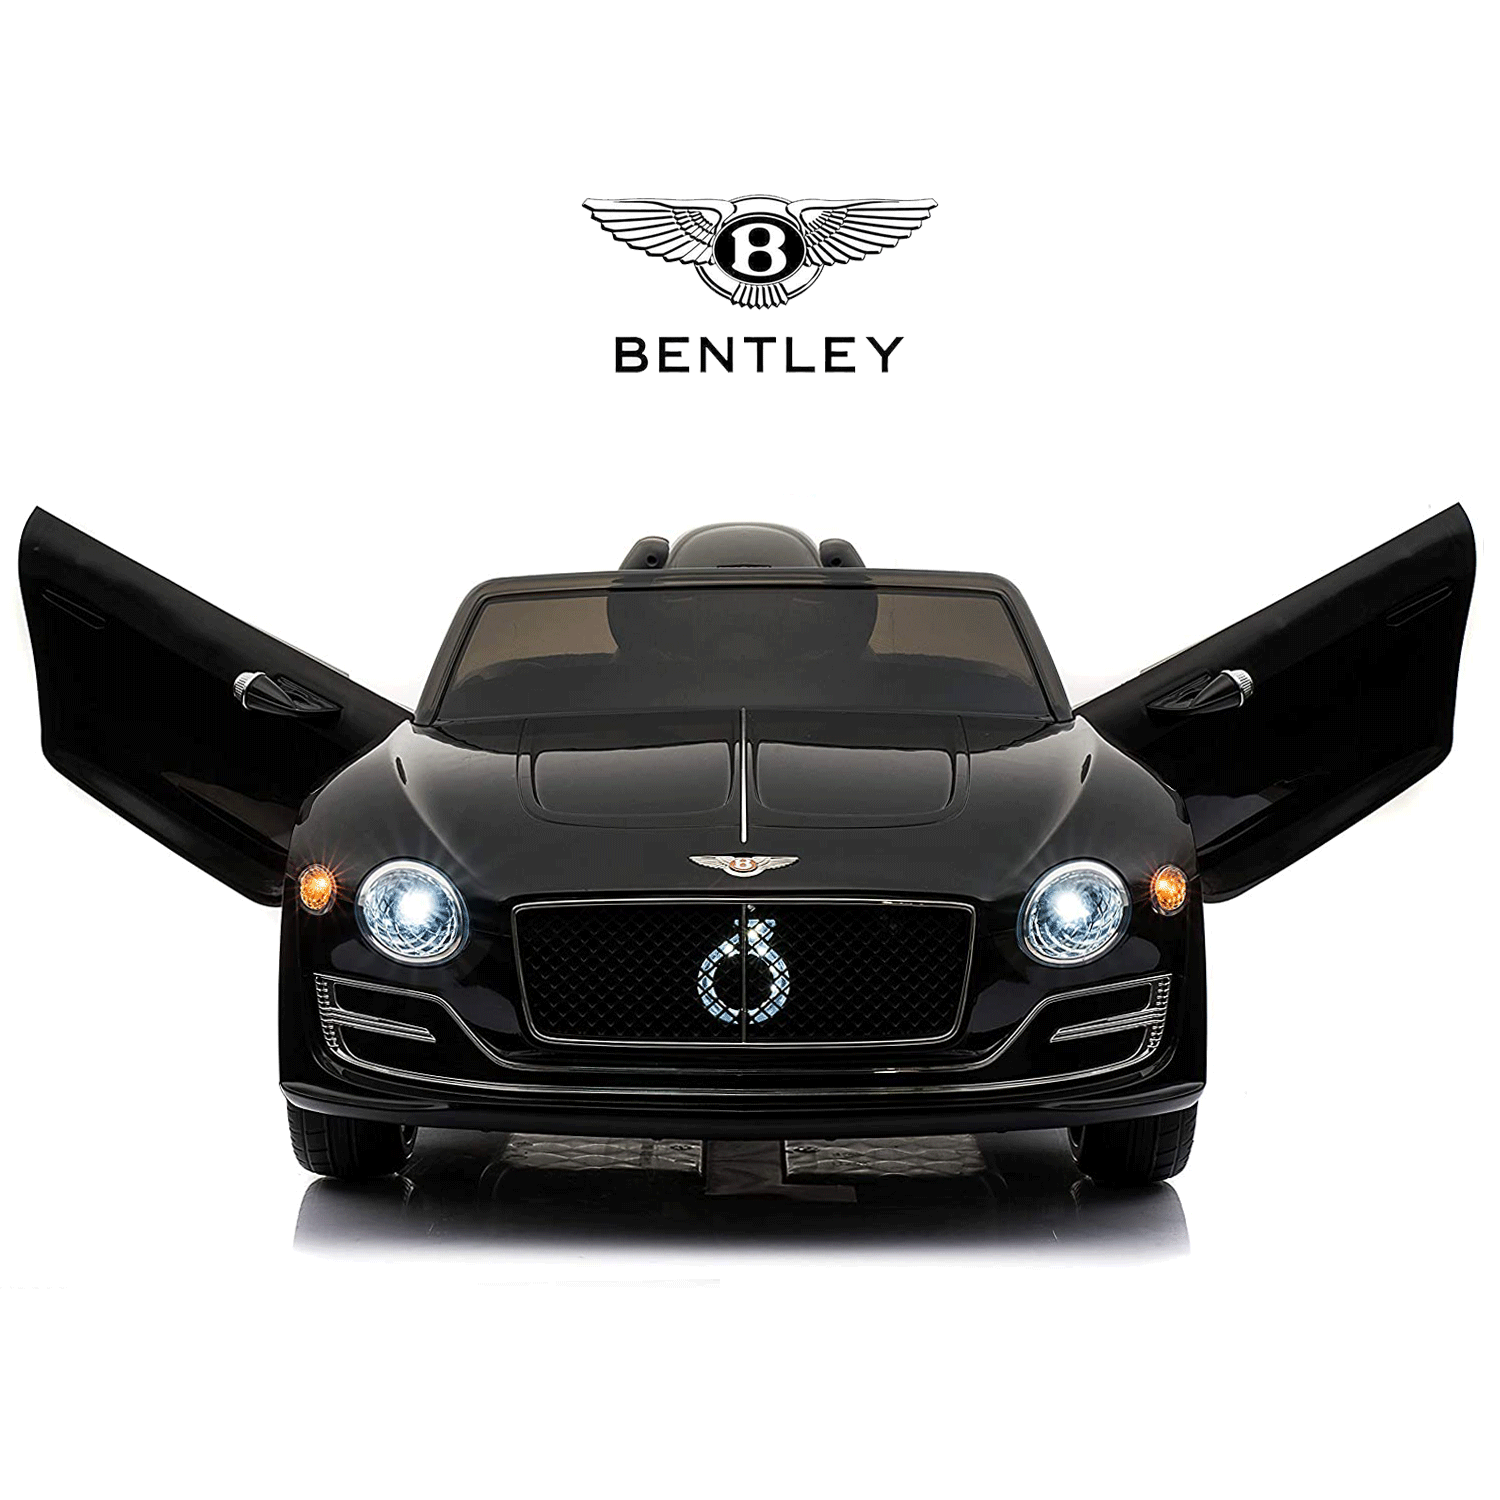 LISUEYNE Official Licensed Bentley Ride on Car,12V Electric Vehicles for Boys Girls,RC,Music,Black